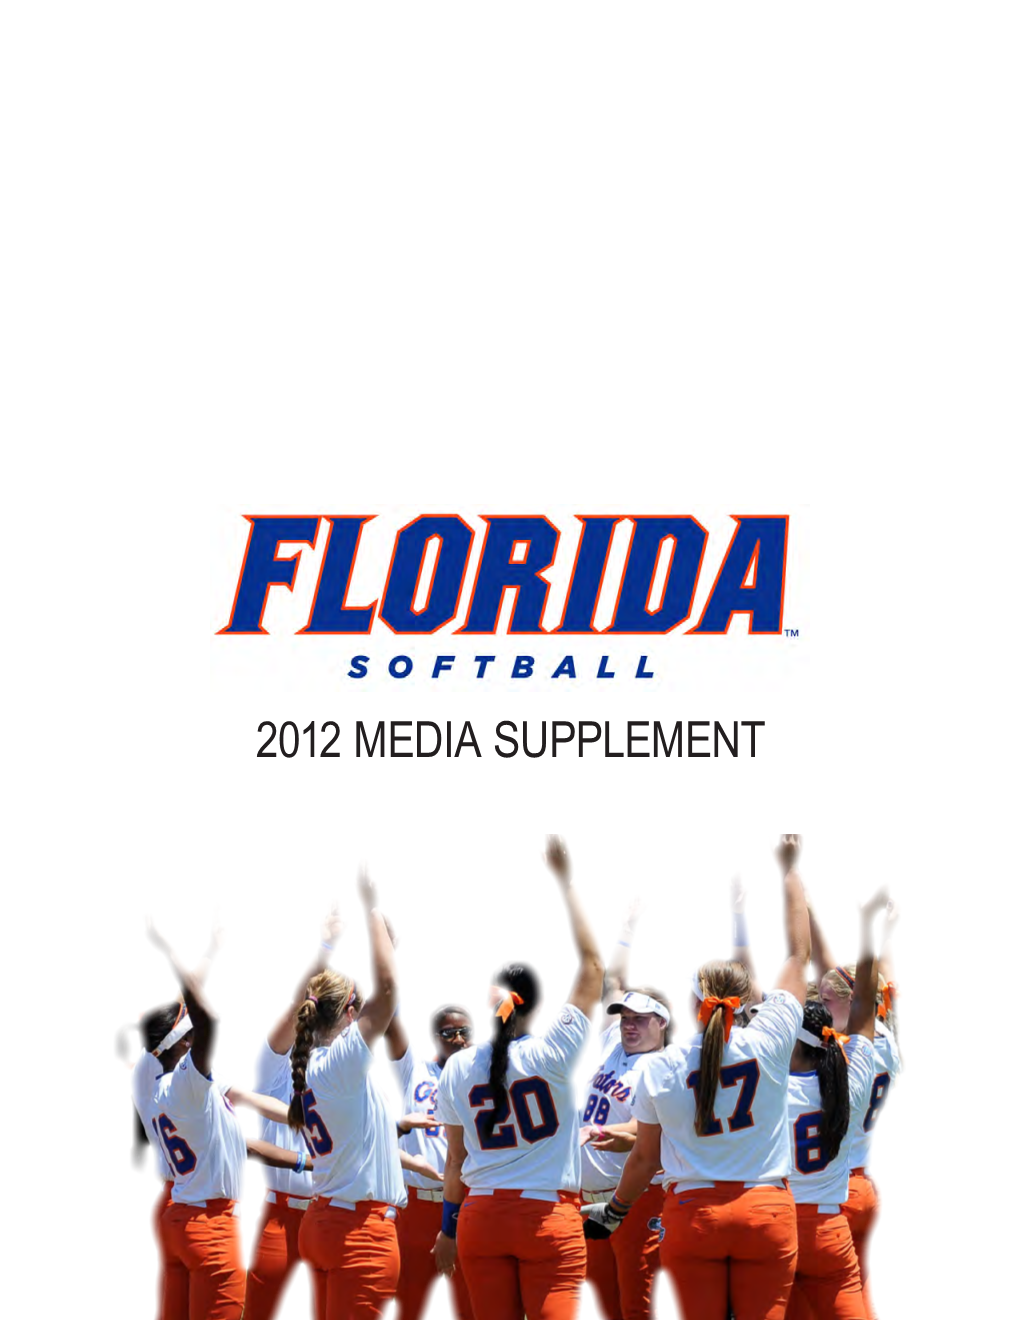 2012 Media Supplement Florida Softball 2012 Media Supplement